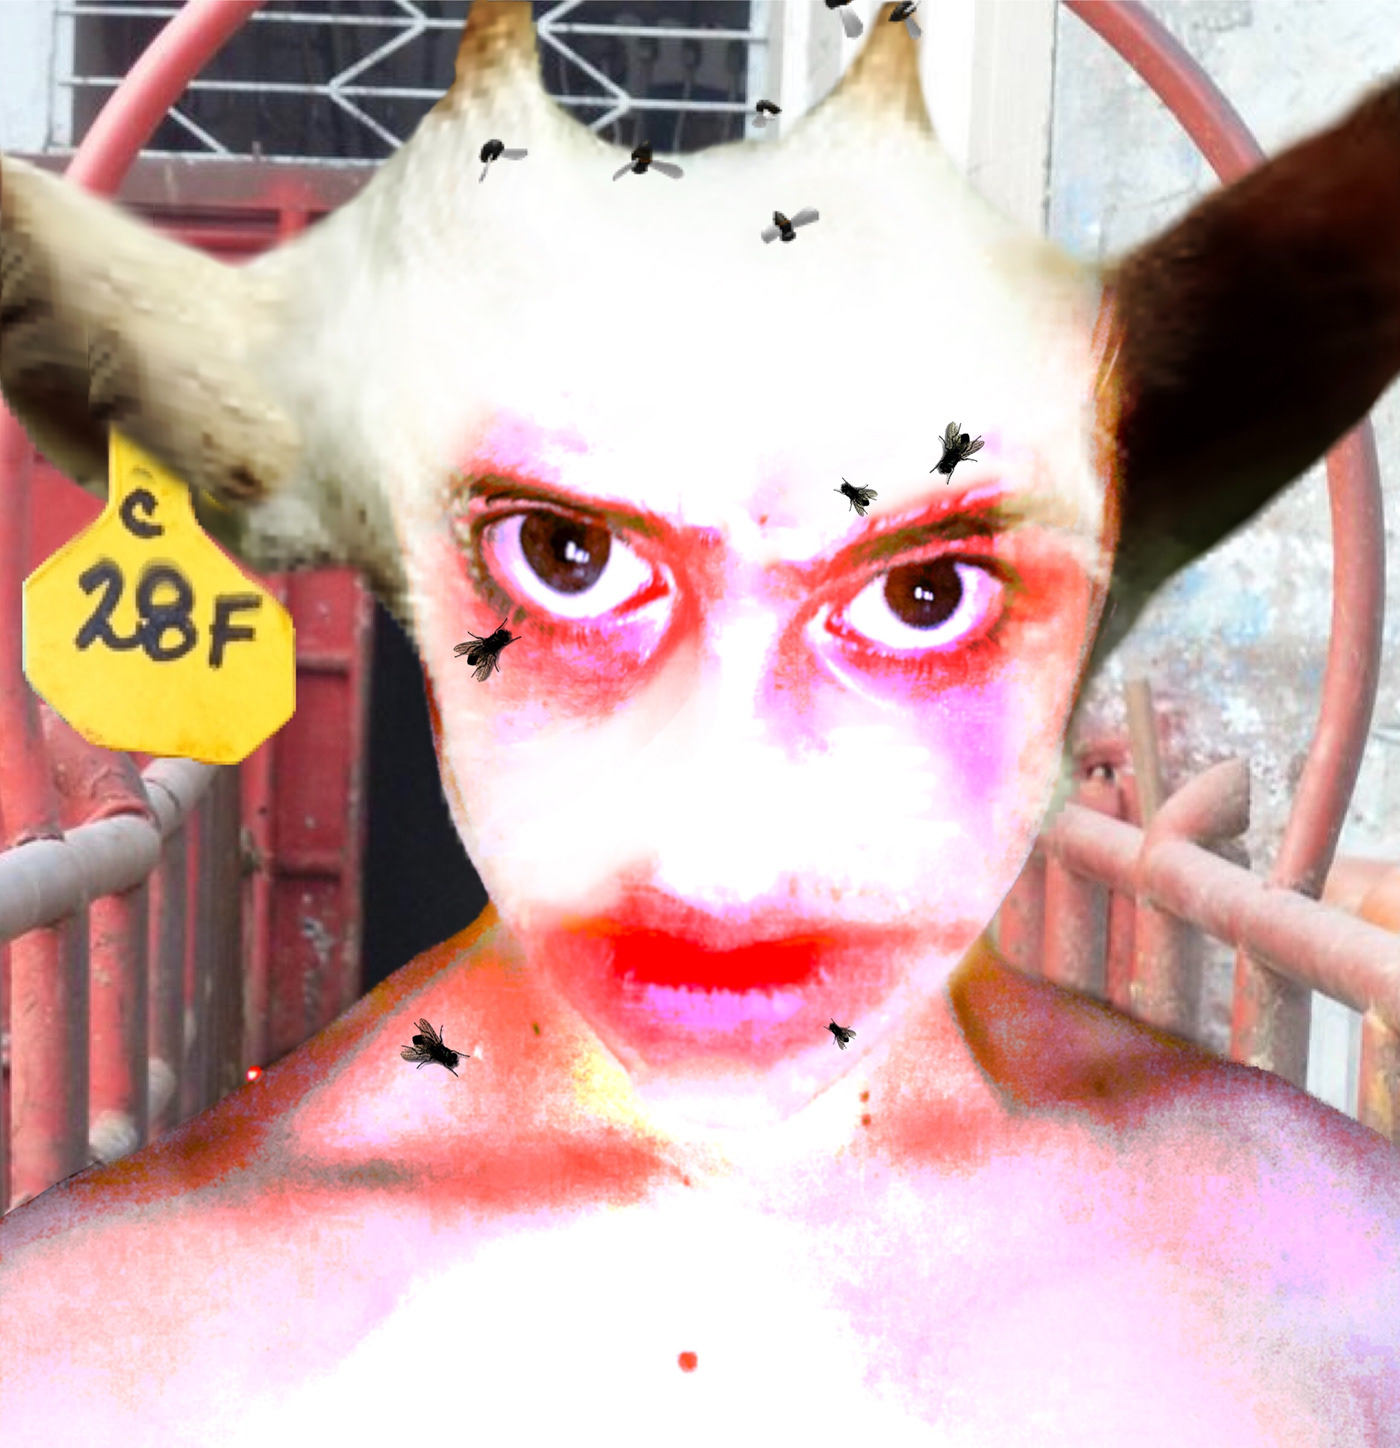 body horror creature horror Photo Manipulation 